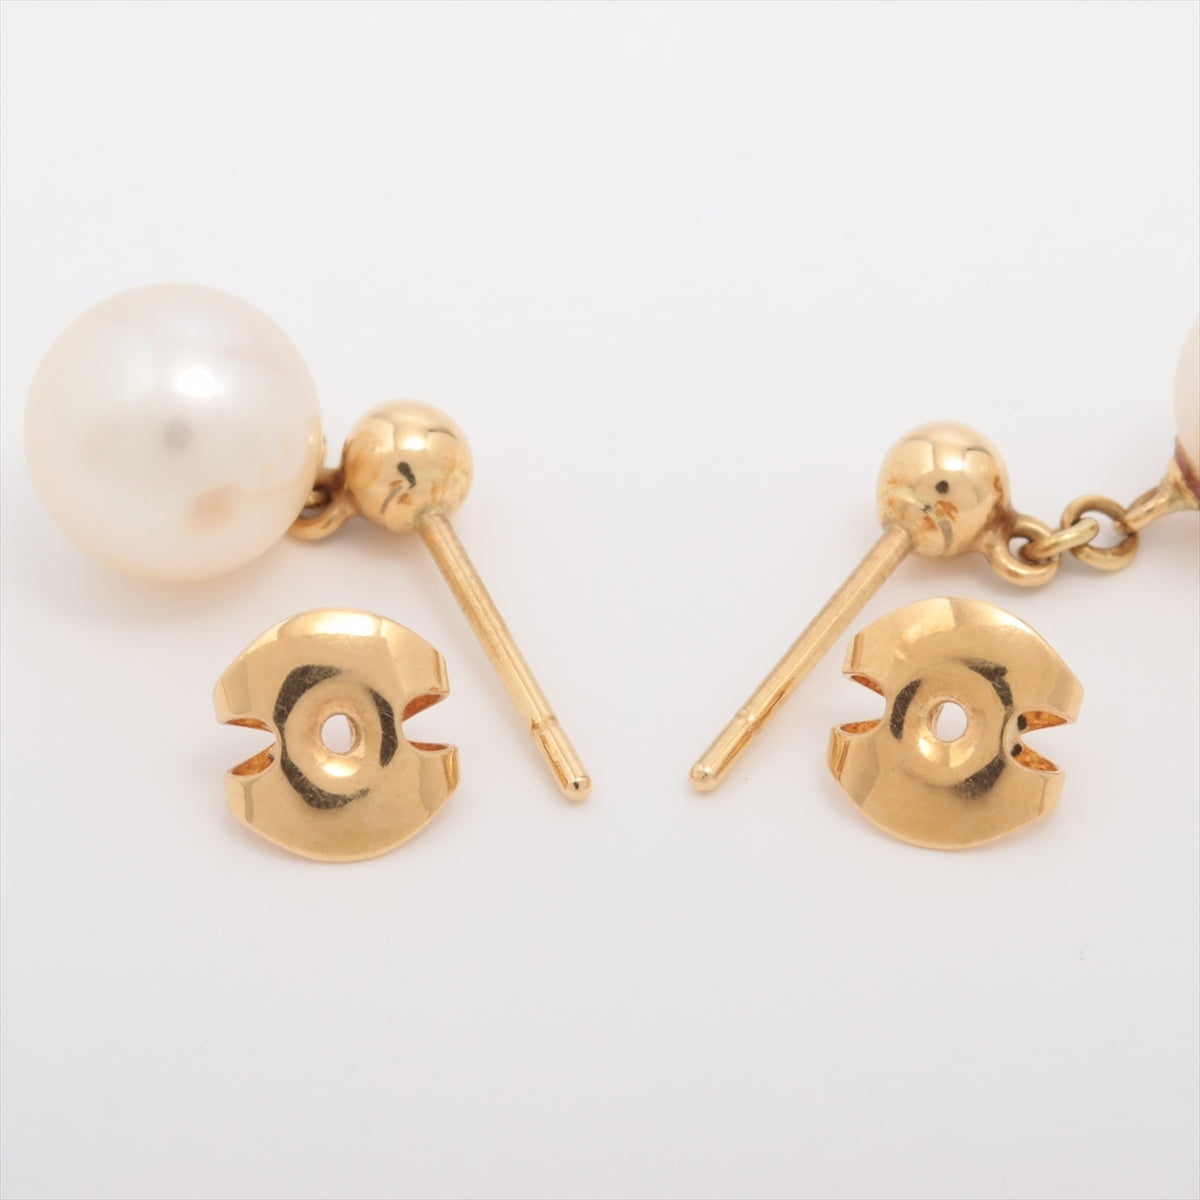 TASAKI Pearl Piercing jewelry K18(YG) 3.3g Approx. 8.0mm Main body brand No money stamp